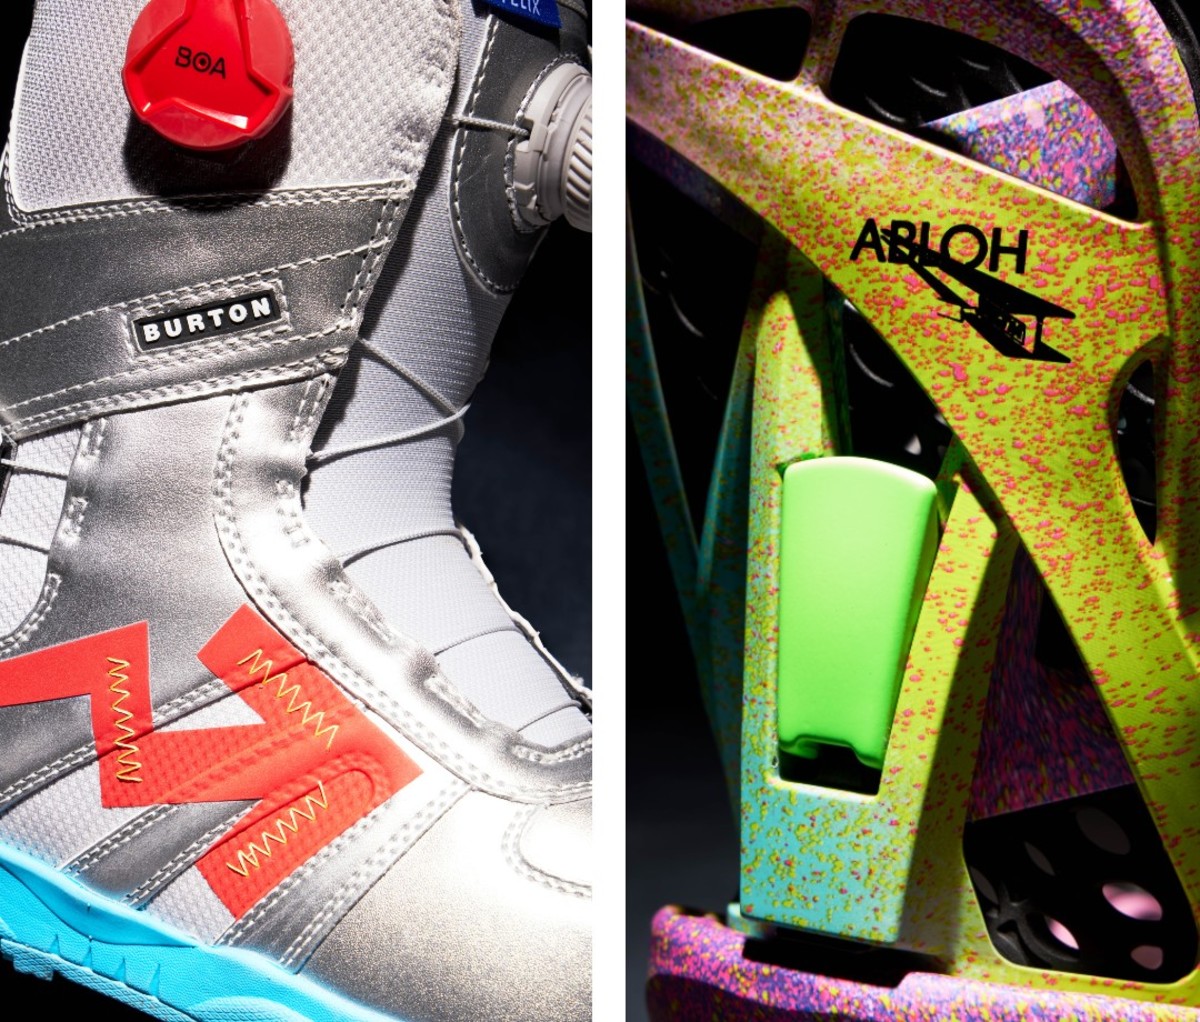 Close-up shots of snowboard boot and binding